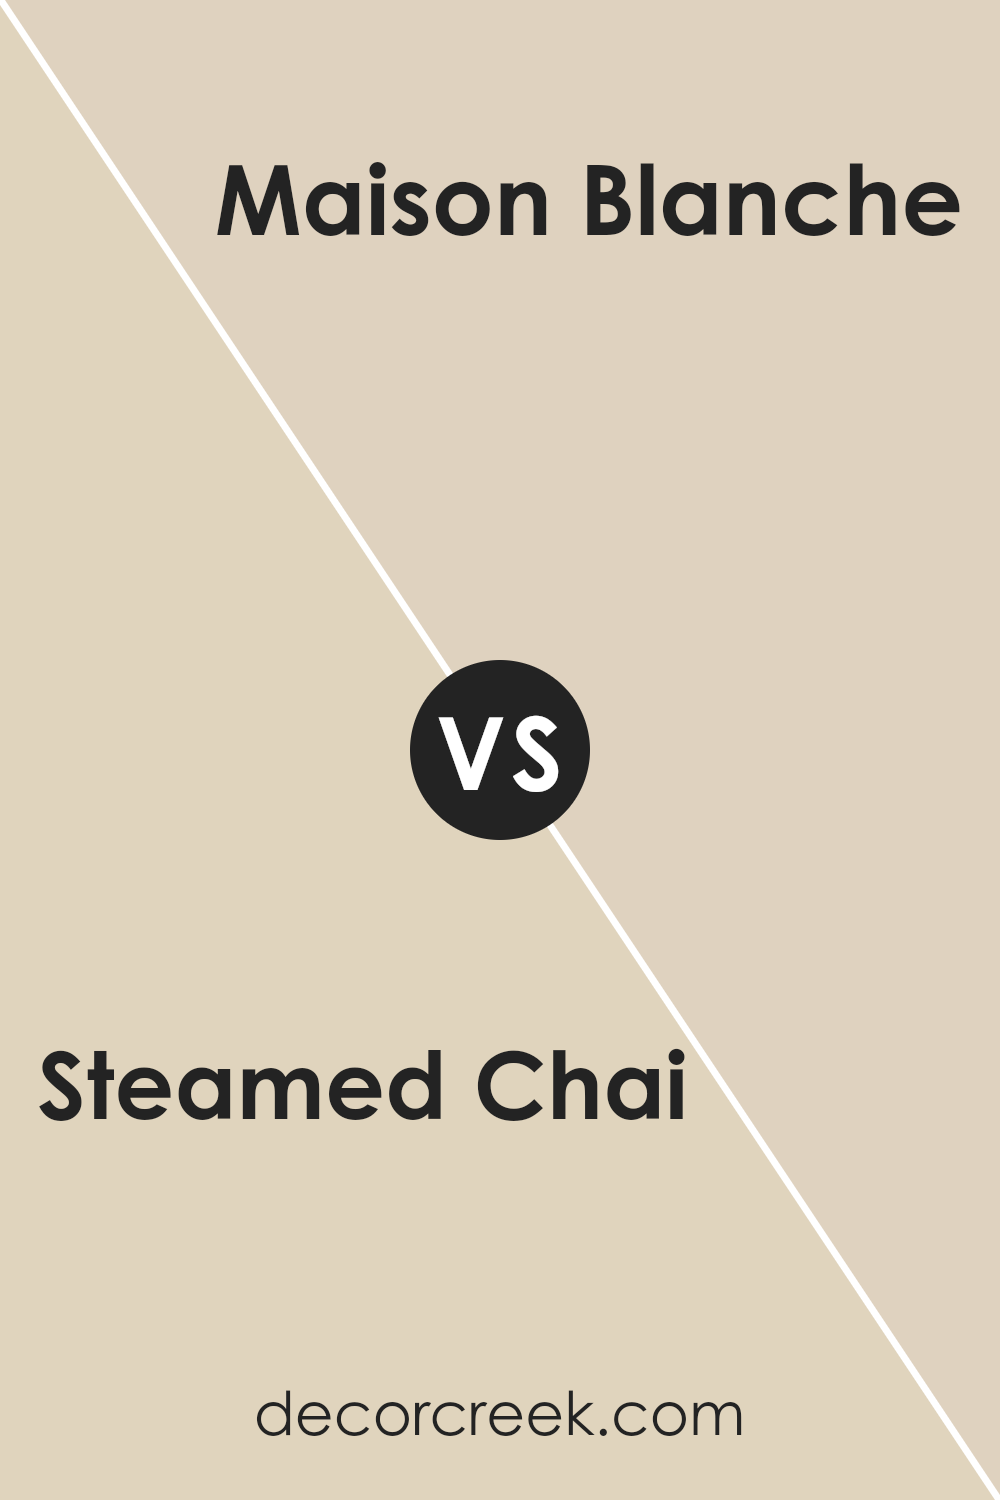 steamed_chai_sw_9509_vs_maison_blanche_sw_7526